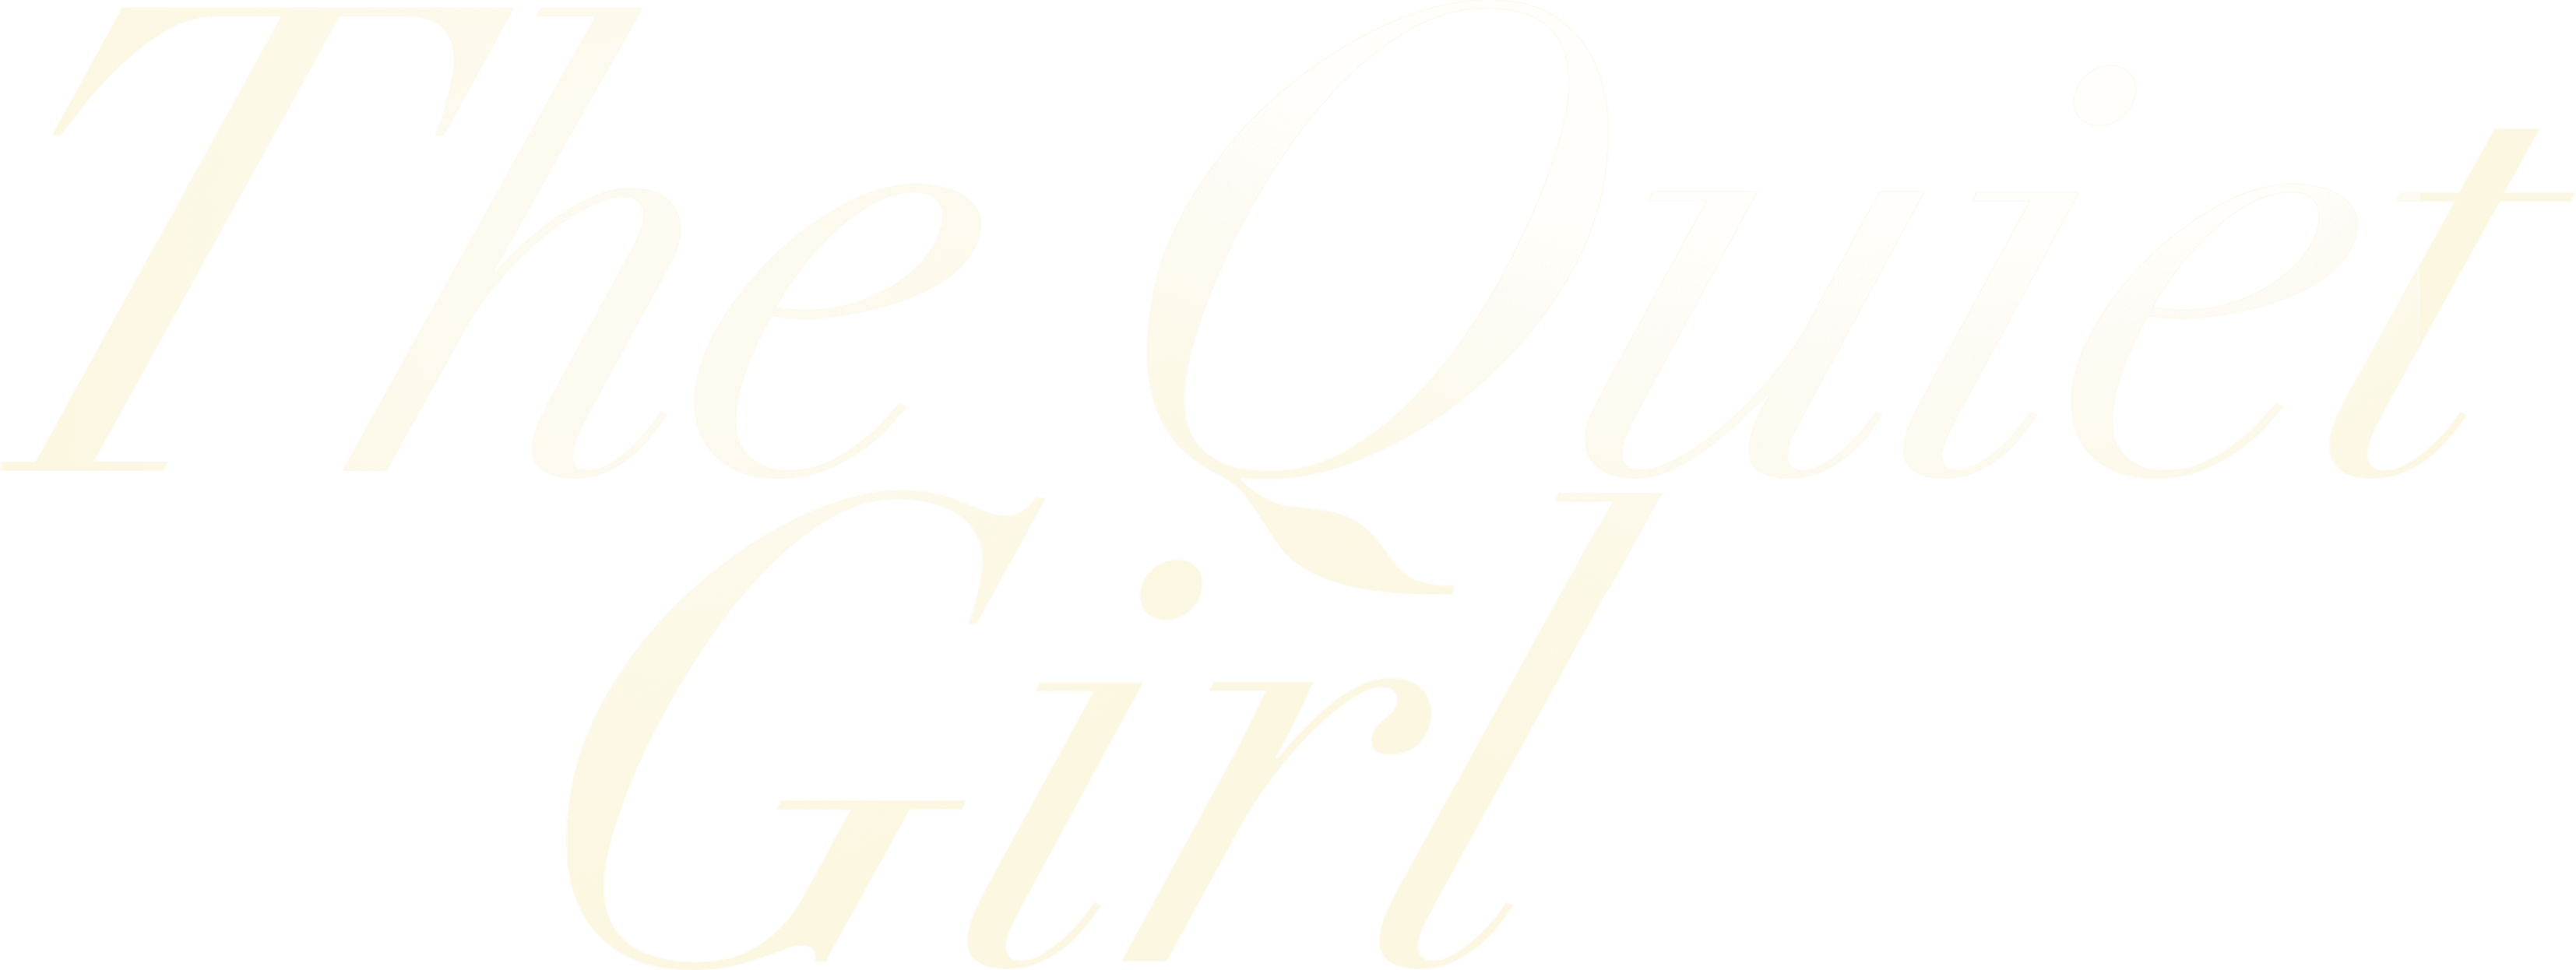 The Quiet Girl logo